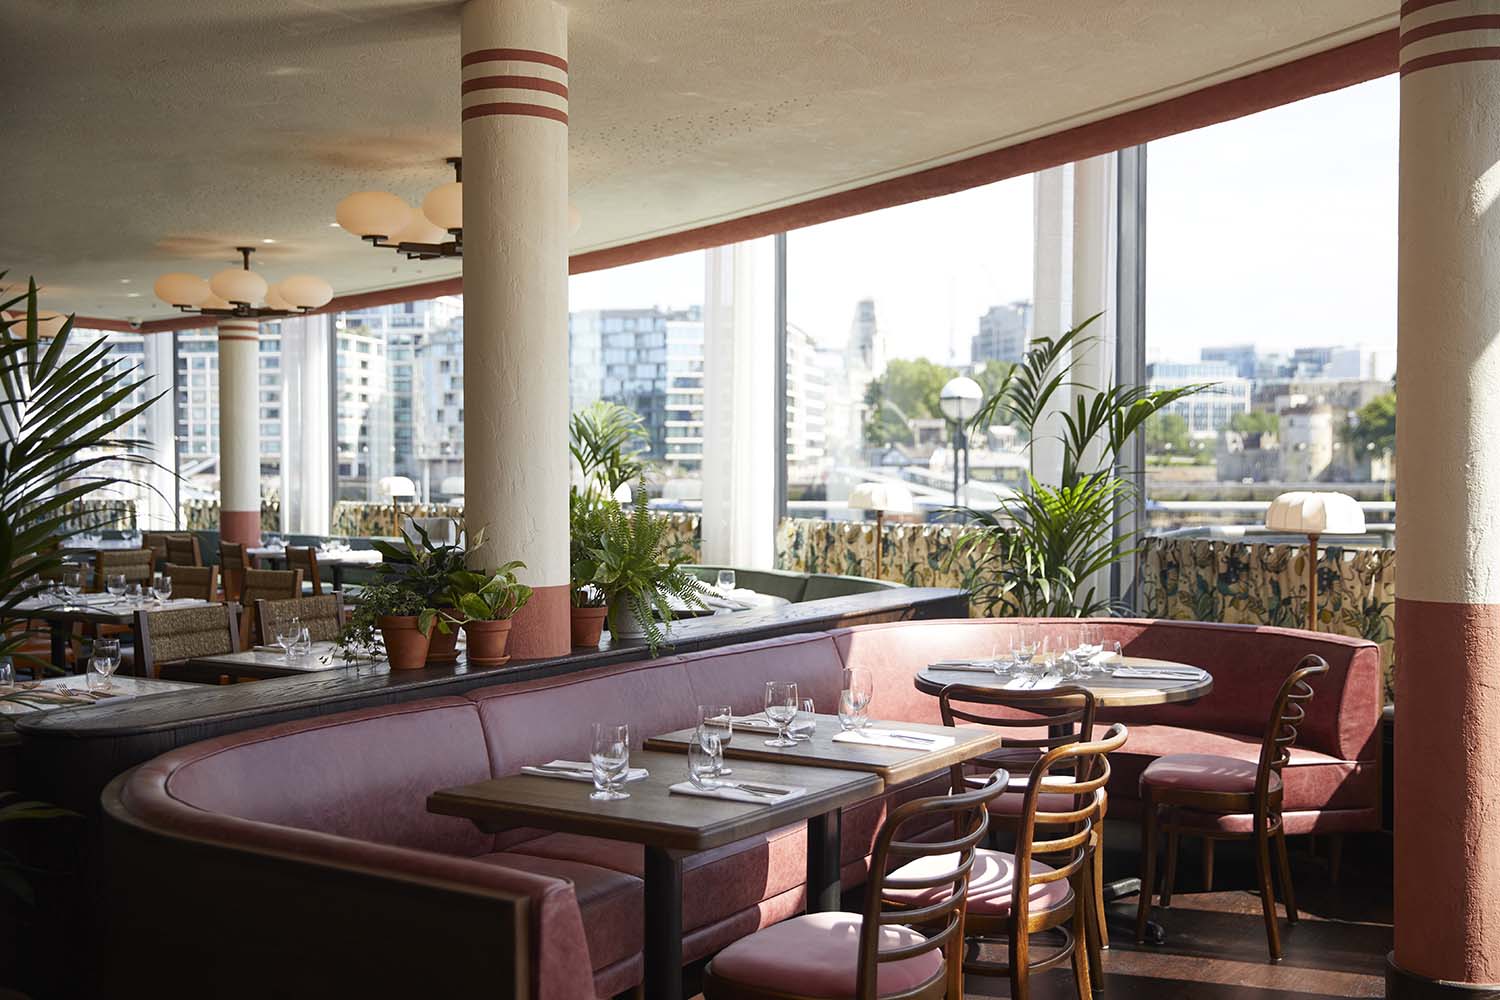 Tavolino London Bridge, Bar & Kitchen Restaurant Designed by Fettle